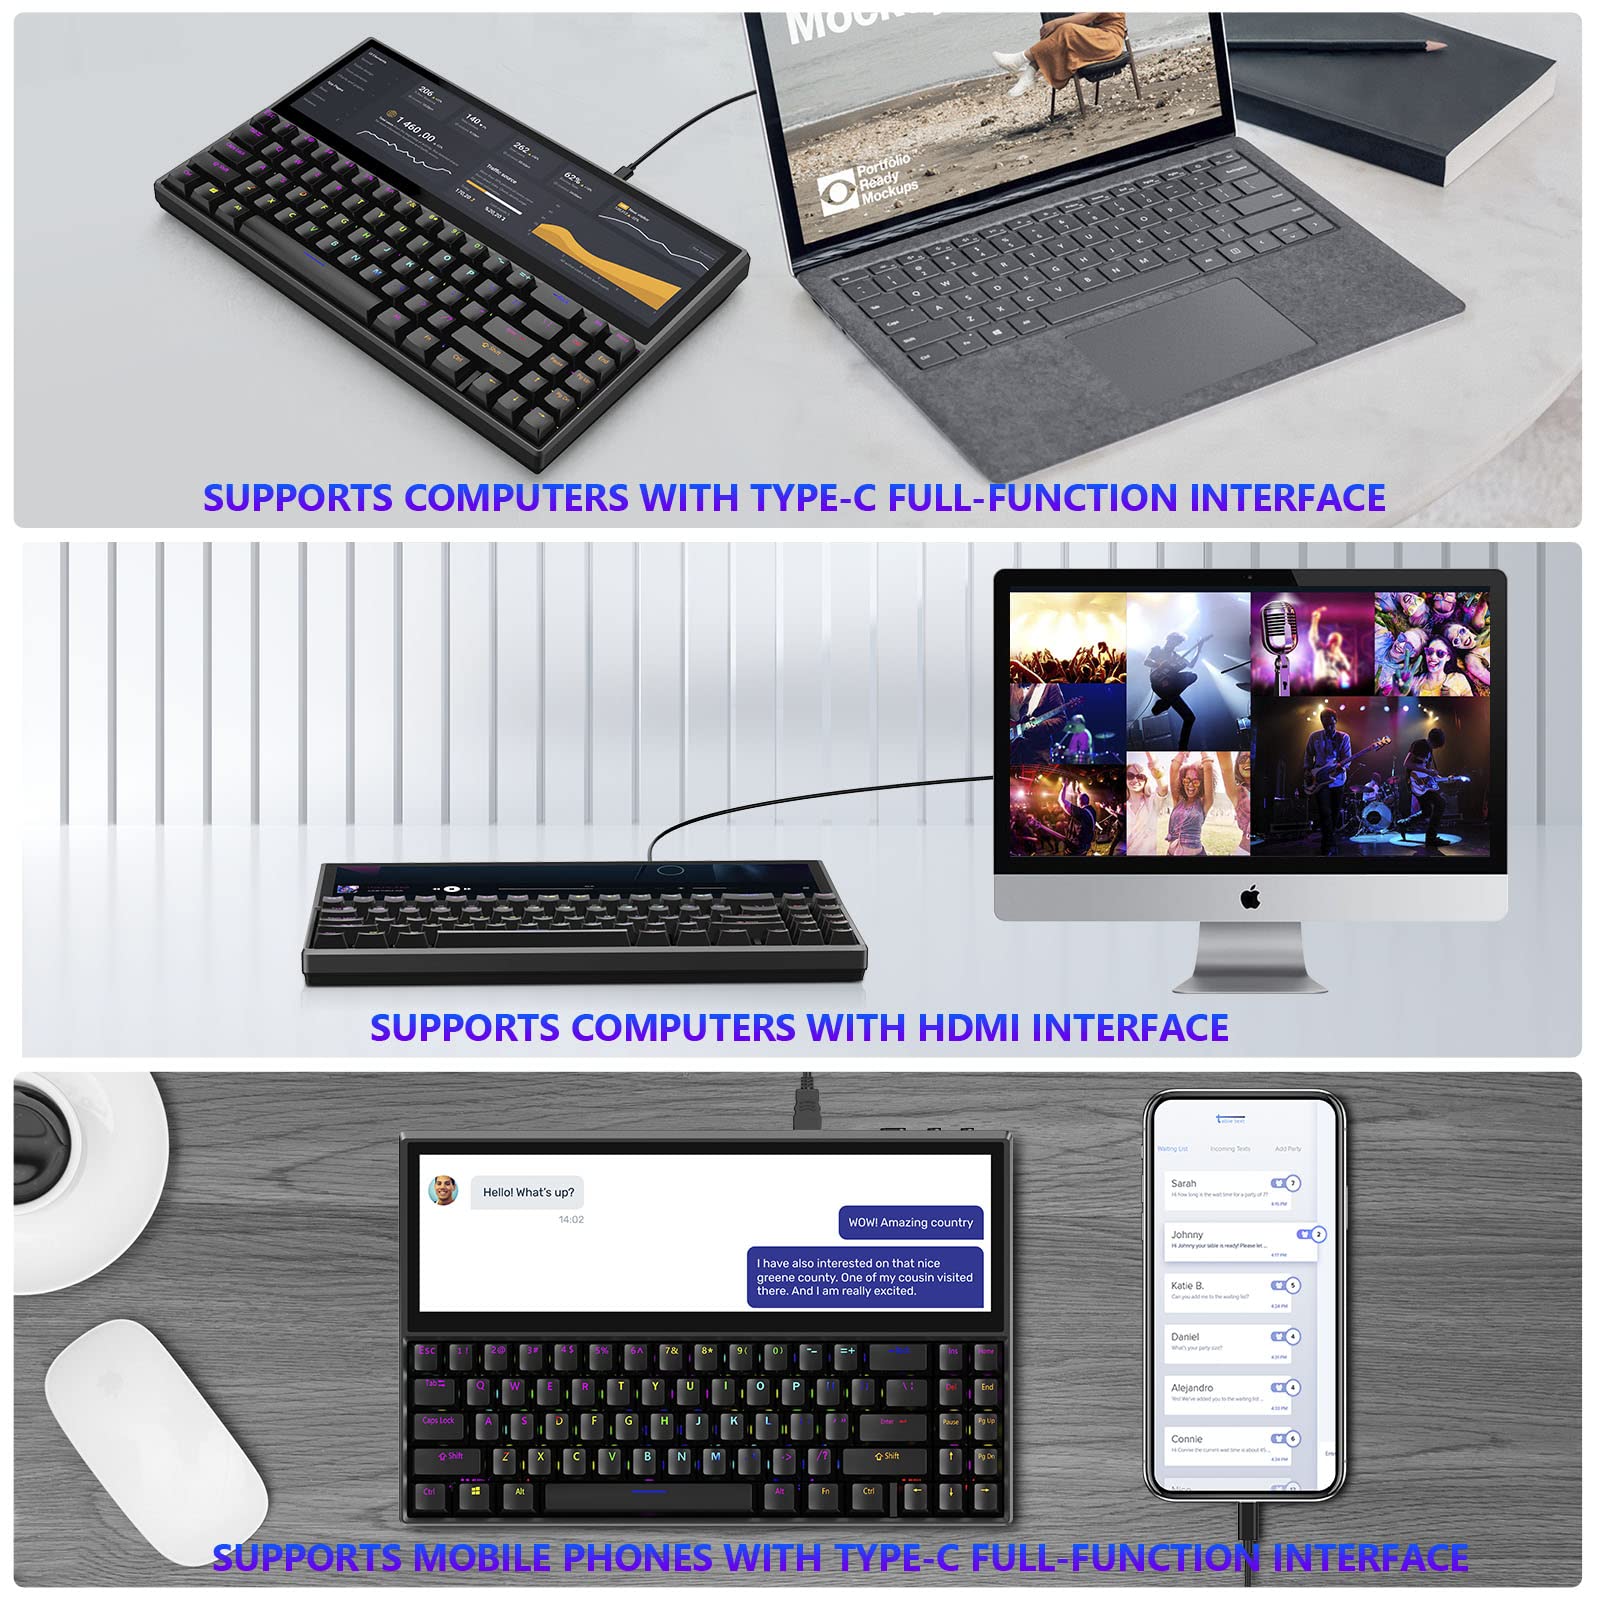 Mechanical Keyboard, Built-in 12.6 Inch Touchscreen, Compact 71 Keys RGB LED Backlit N-Key Multifunctional Split Screen Keyboard for Mac Windows Android - Black